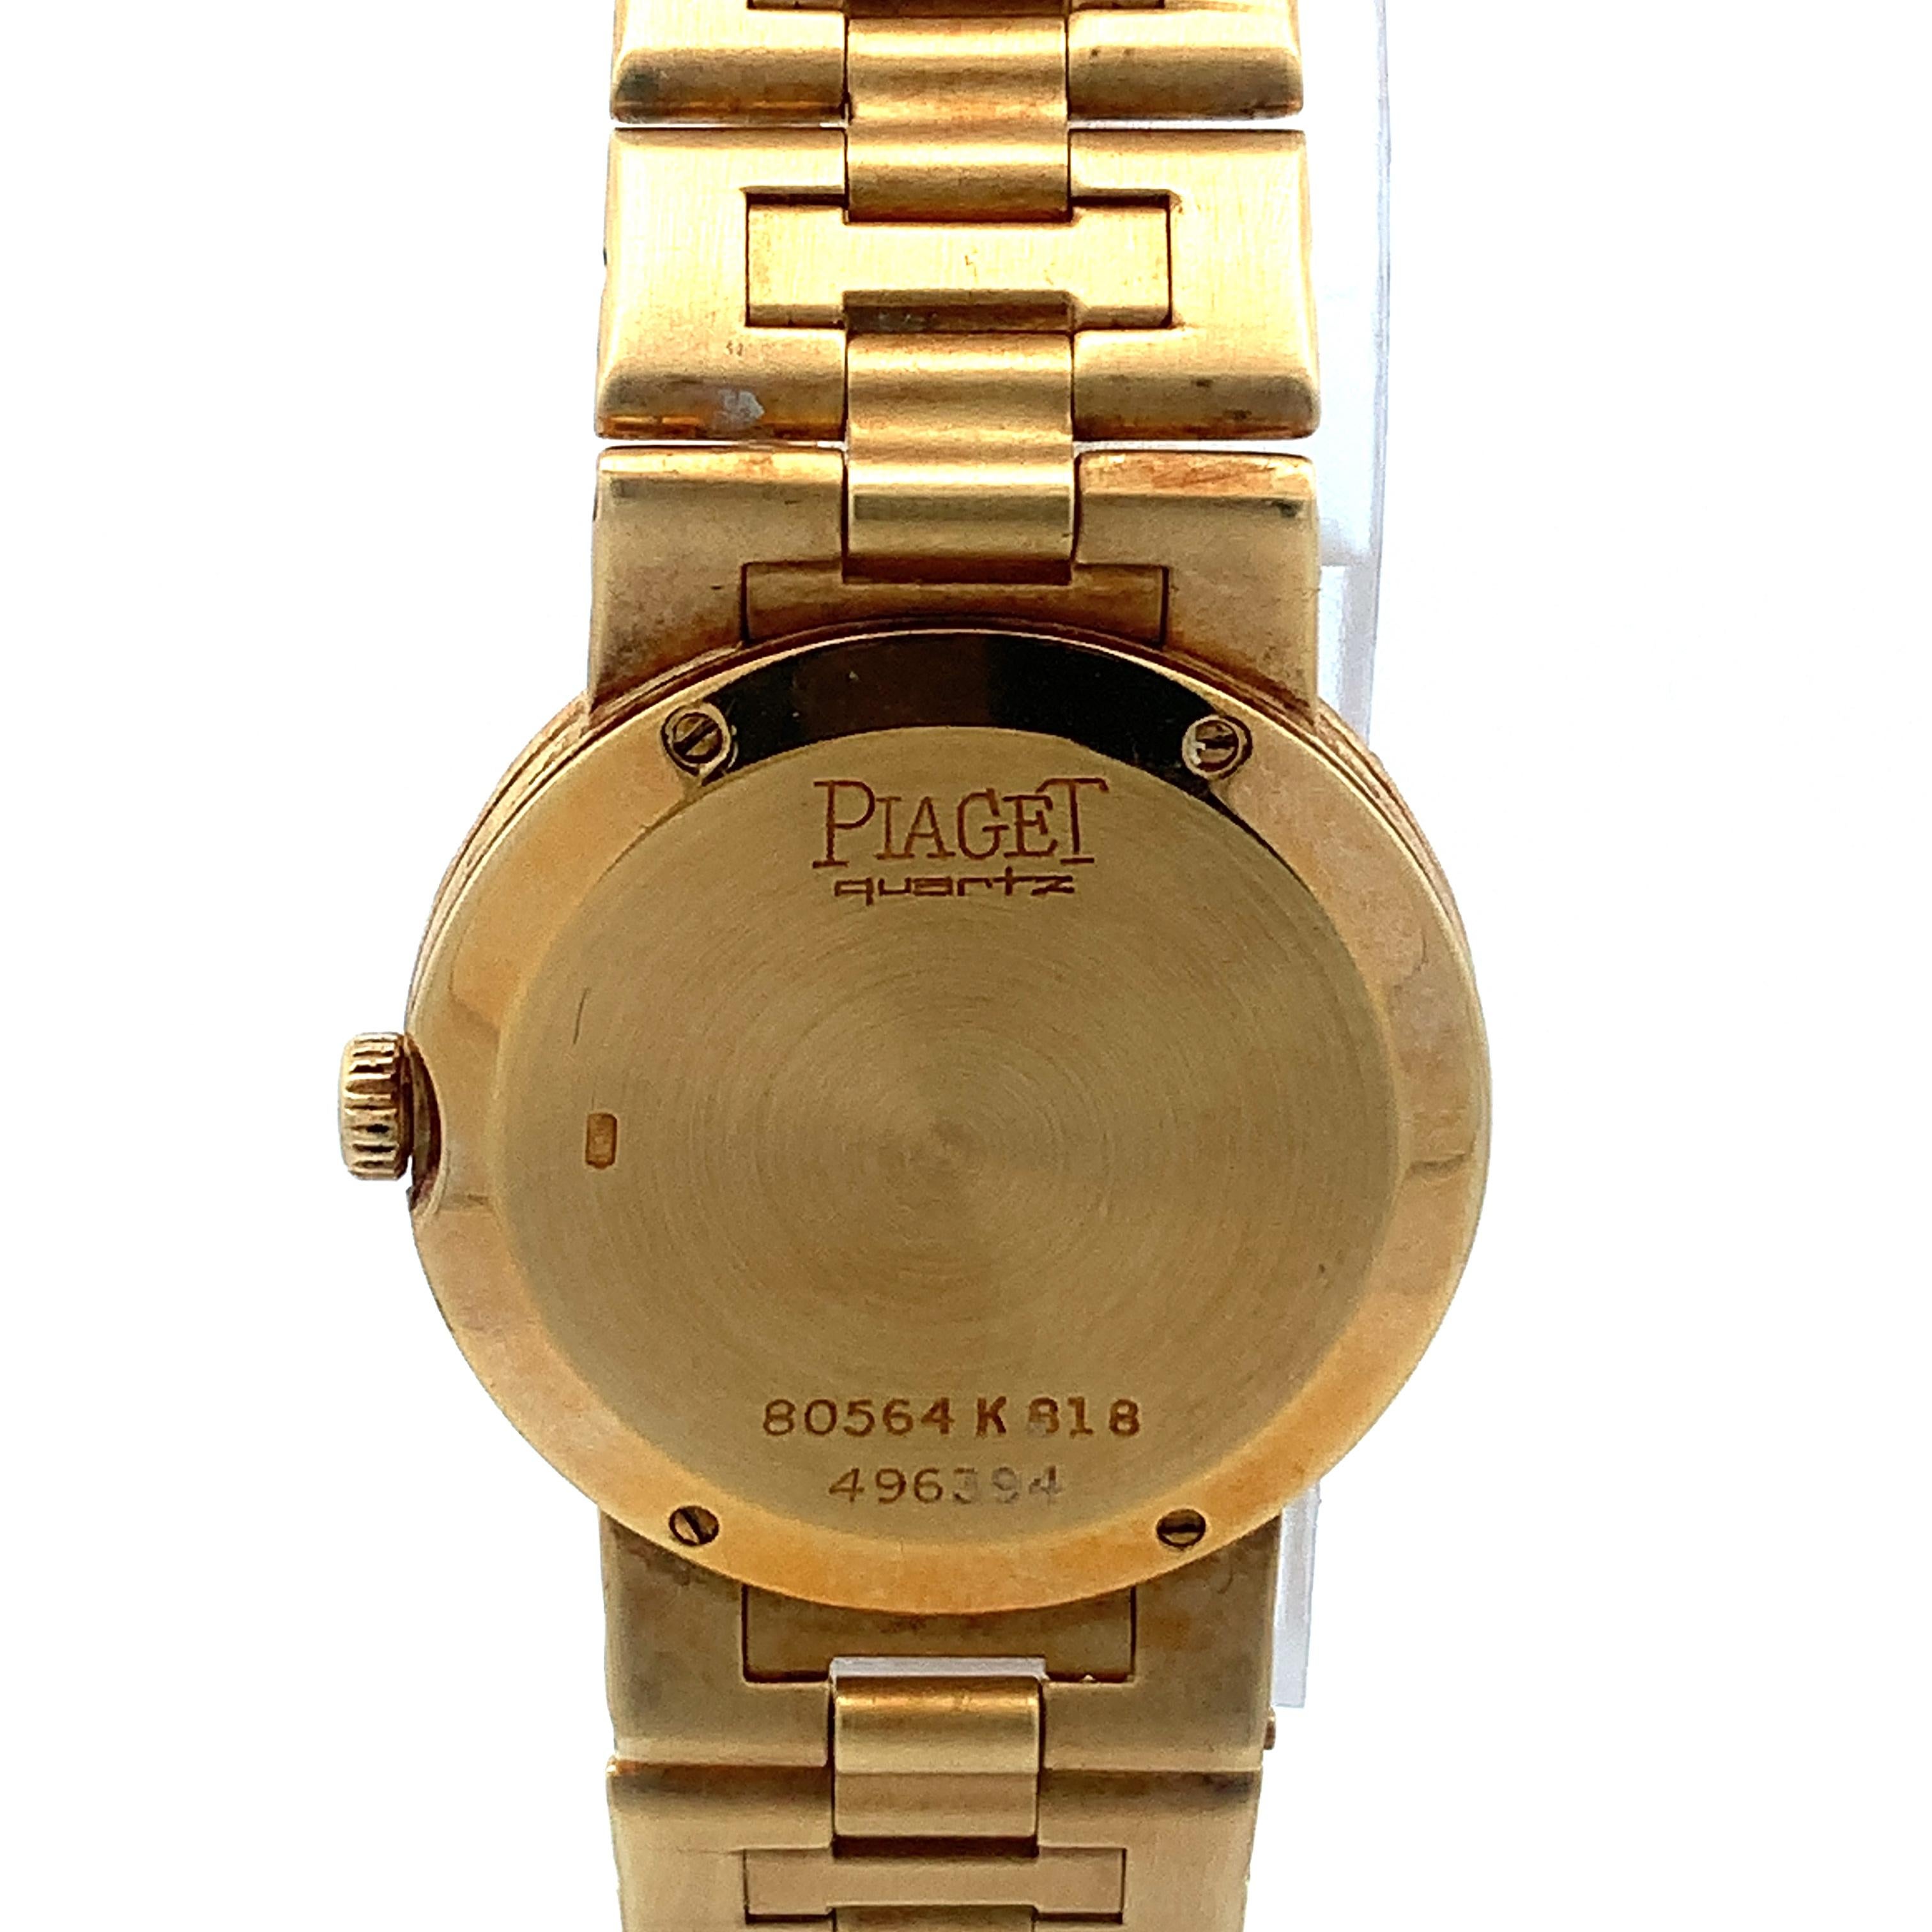 Art Deco Piaget Diamond Gold Lady's Watch - Model 84024K817 For Sale